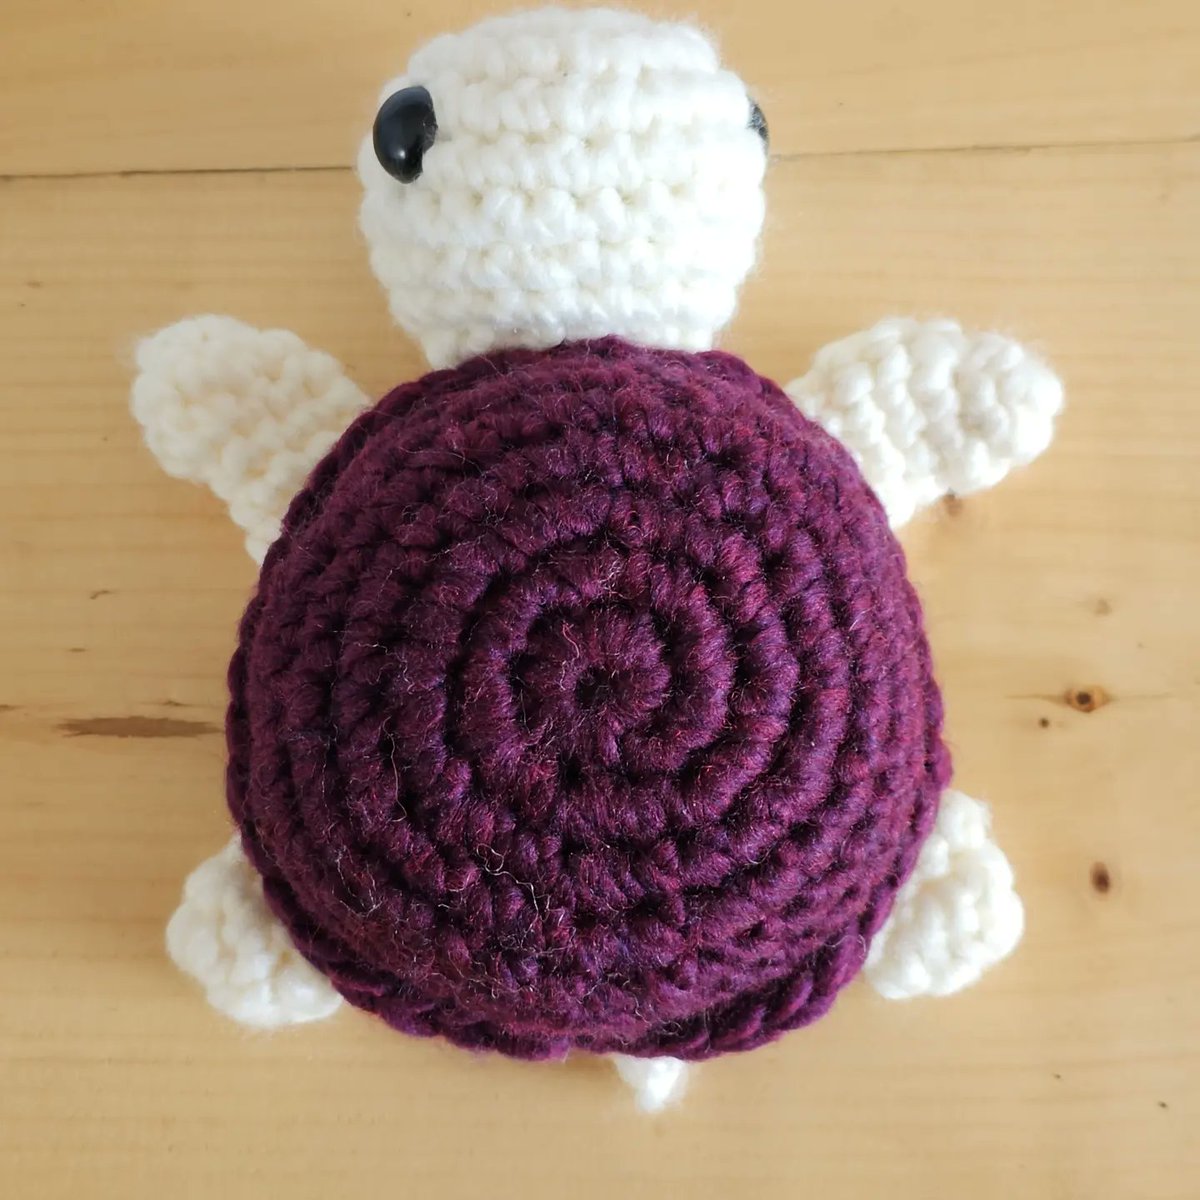 My first turtle (definitely won't be my last 😜)

#crochet #crocheter #amigurumi #crochetturtle #handmade #crochetlife #yarnlife #crochettoy #crochetersgonnacrochet #crocheteroftwitter